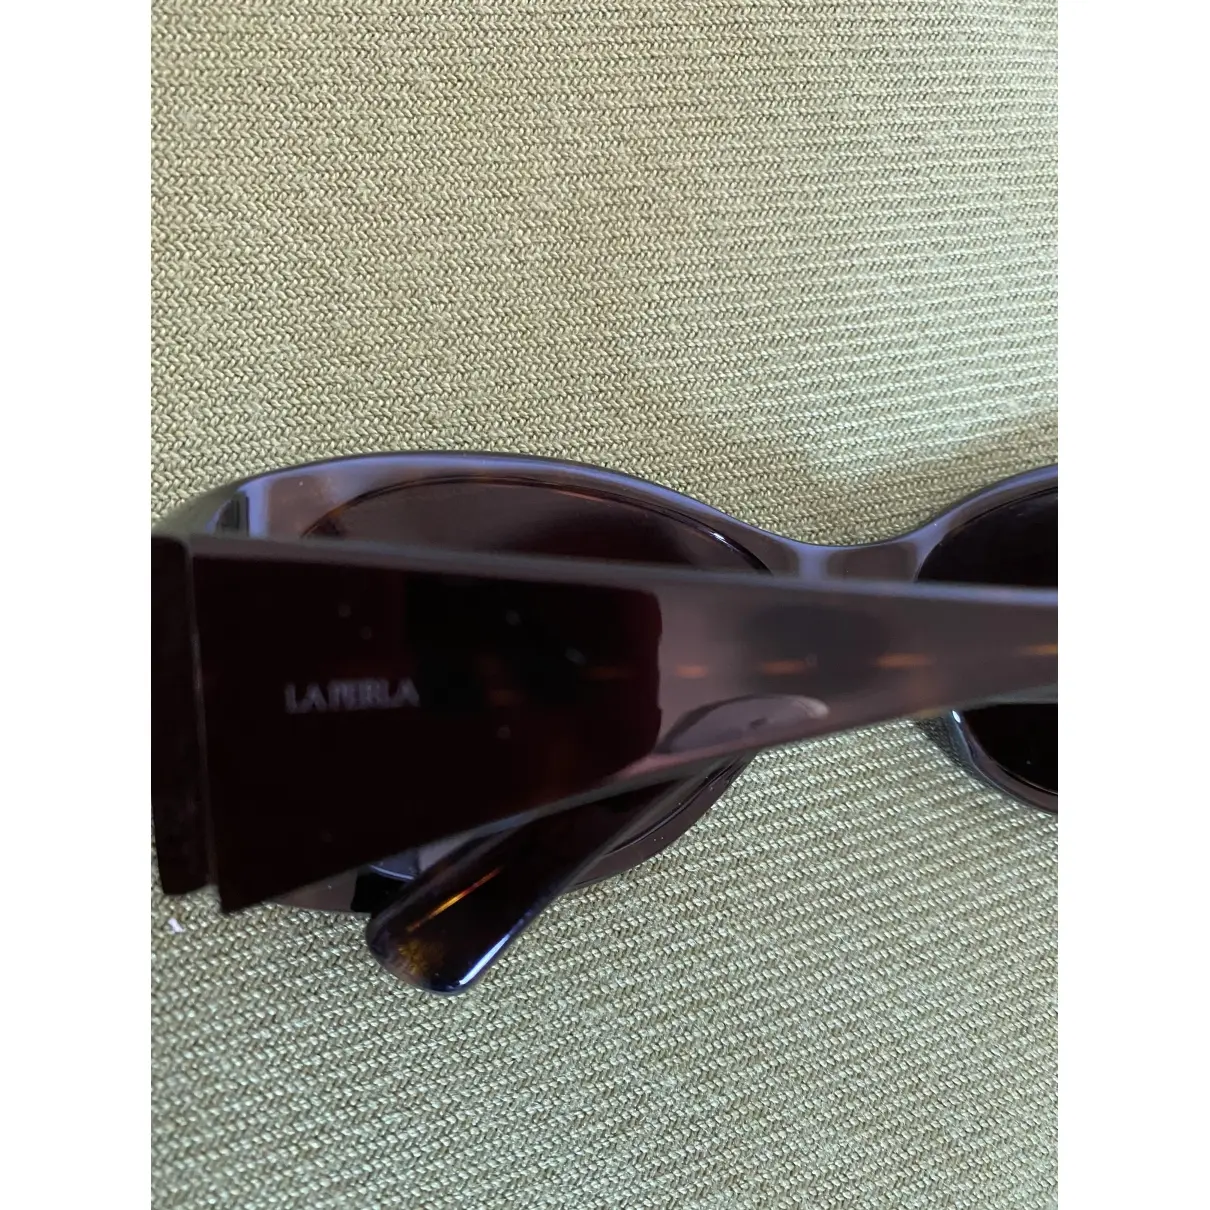 Buy La Perla Sunglasses online